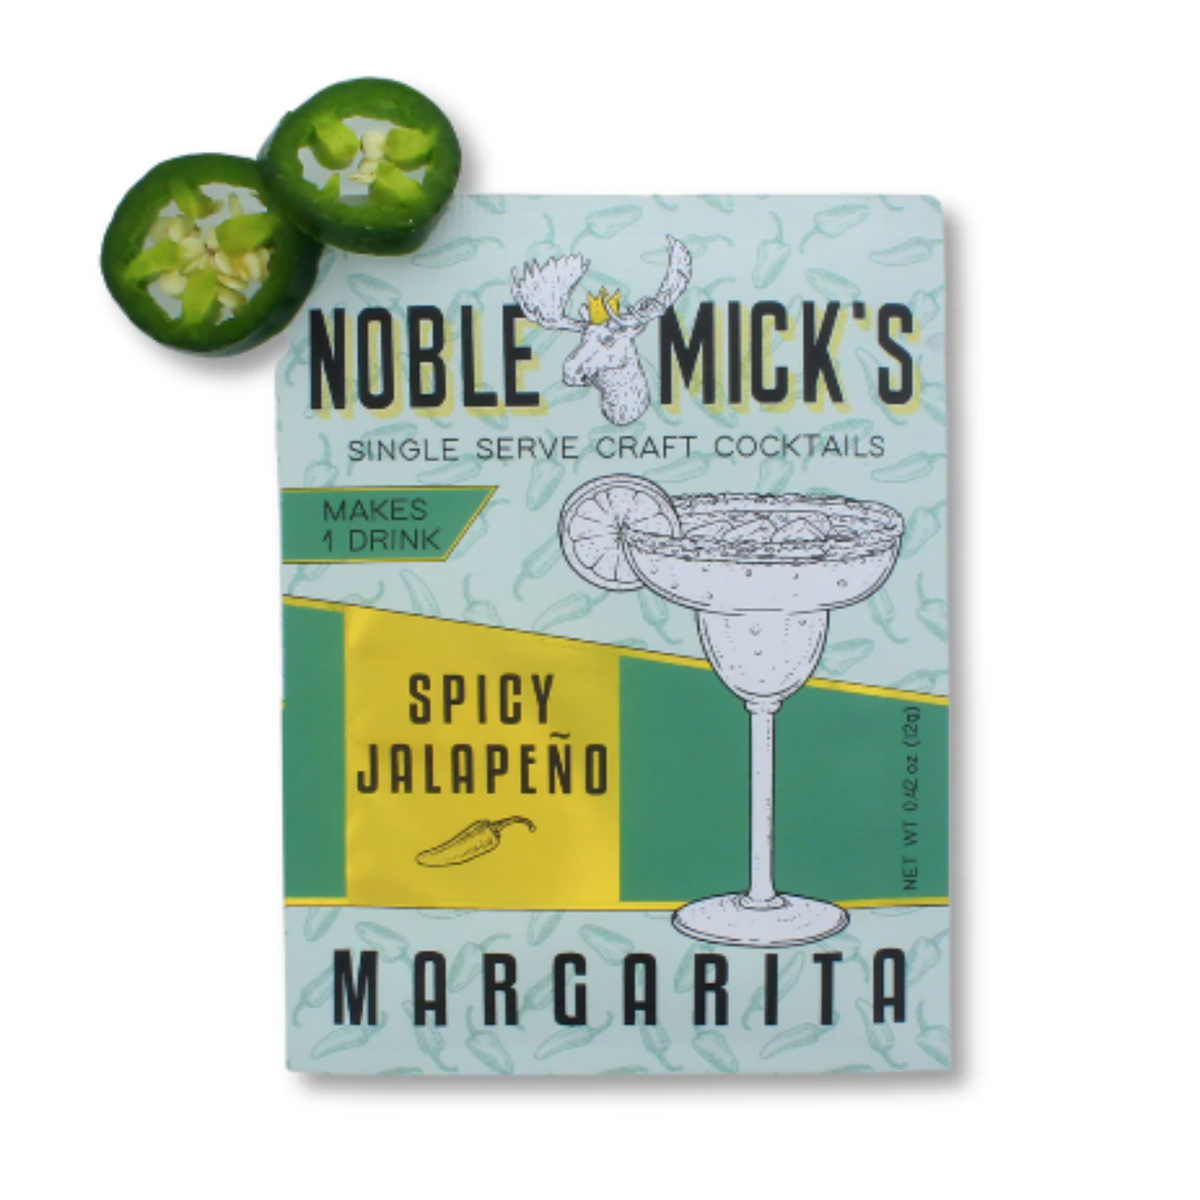 Spicy Jalapeno Margarita - single serve craft cocktails